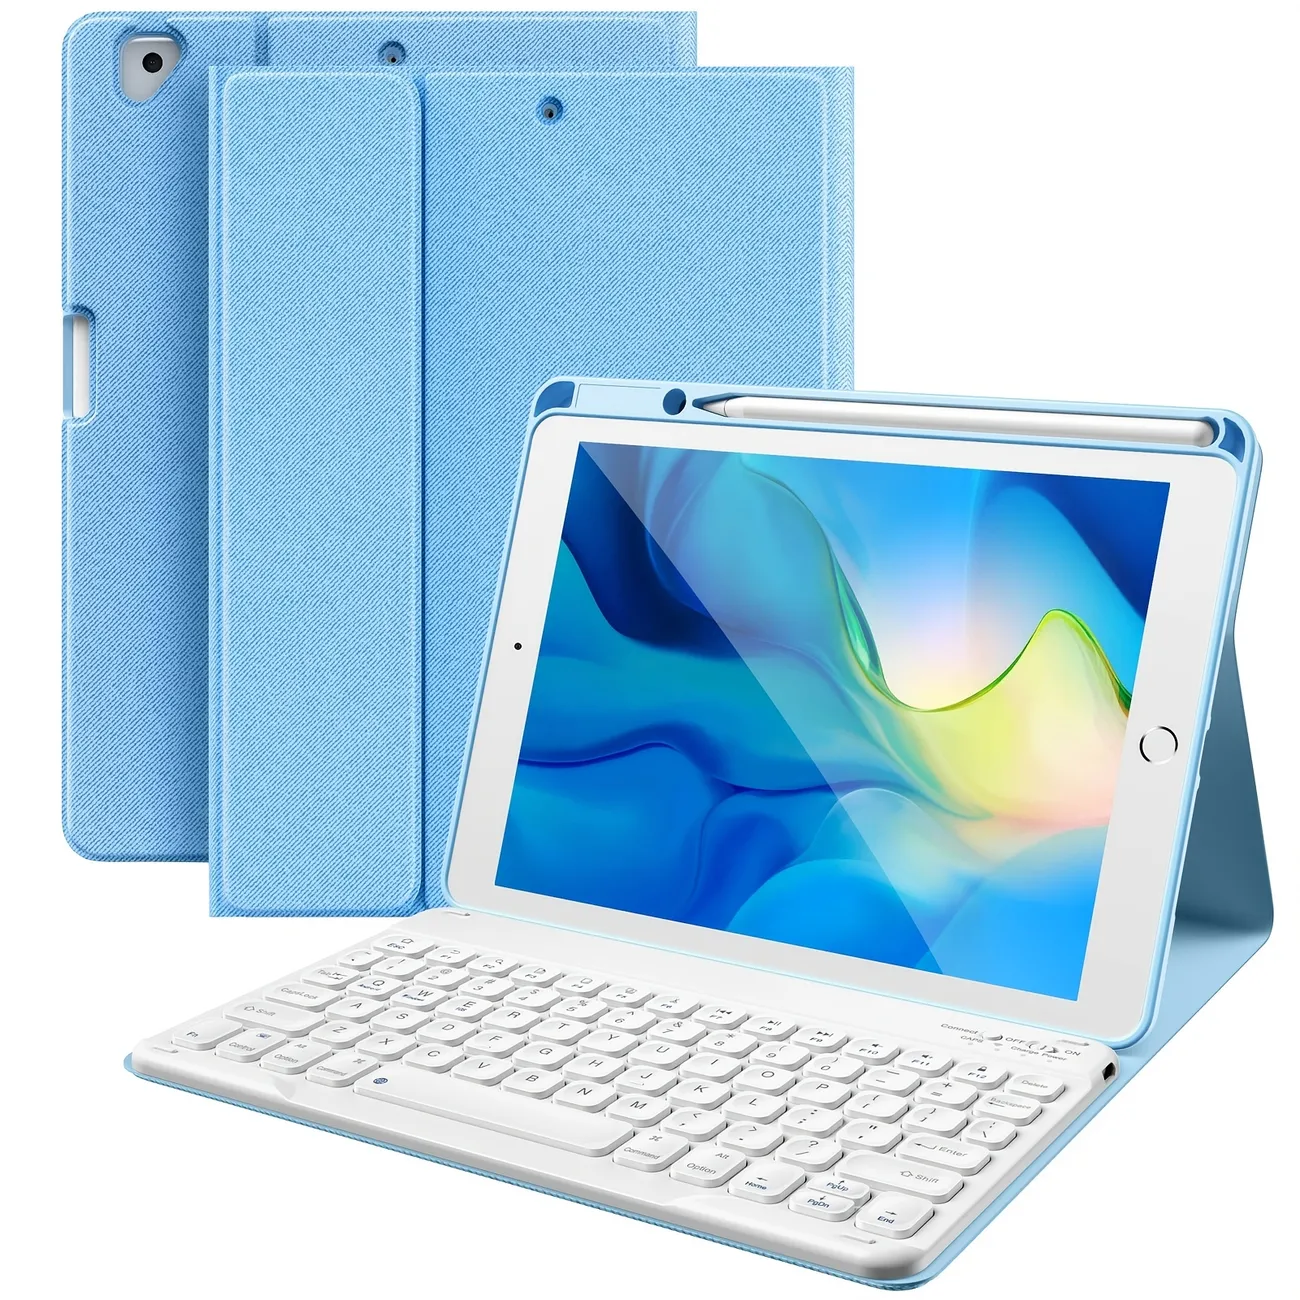 IPad 10.2 キーボード付きケース、iPad 第 9/8/7 世代ケース キーボード付き 10.2 インチ、鉛筆ホルダー付きワイヤレス取り外し可能 キーボードカバー IPad Pro 10.5 インチ/iPad Air 第 3 世代用 (ブルー) - Temu Japan